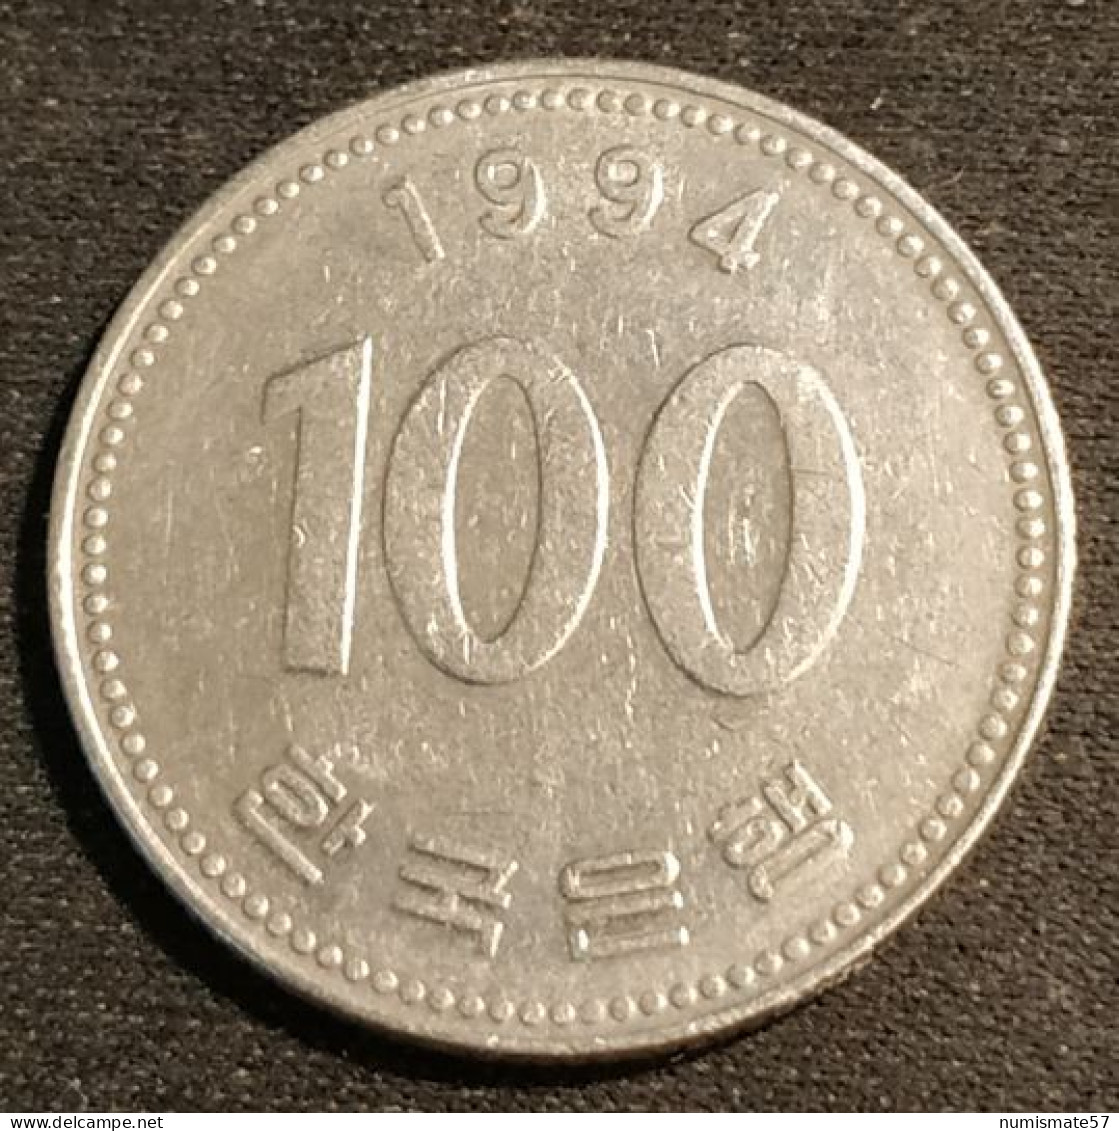 COREE DU SUD - SOUTH KOREA - 100 WON 1994 - KM 35 - Korea (Süd-)